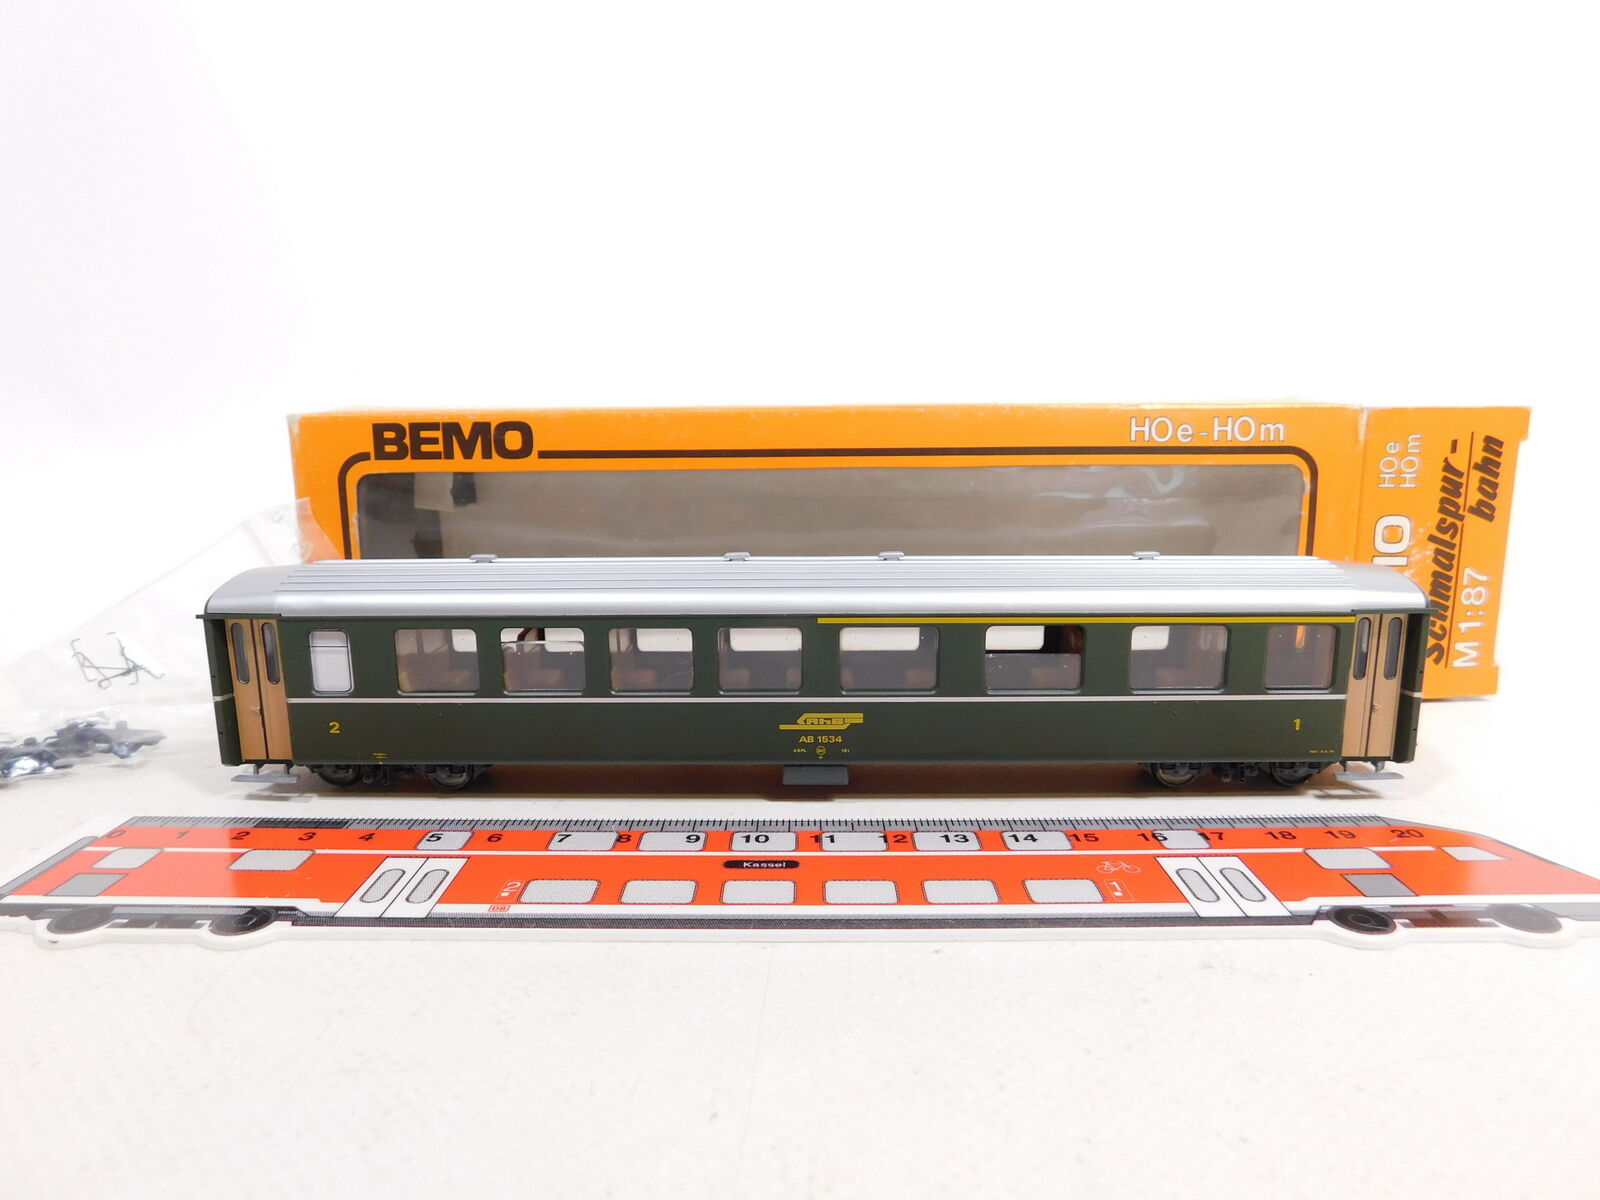 Cu687-0, 5 # Bemo H0m/dc 3251 114 Passenger Car From 1534 Rhb , Very Good +box